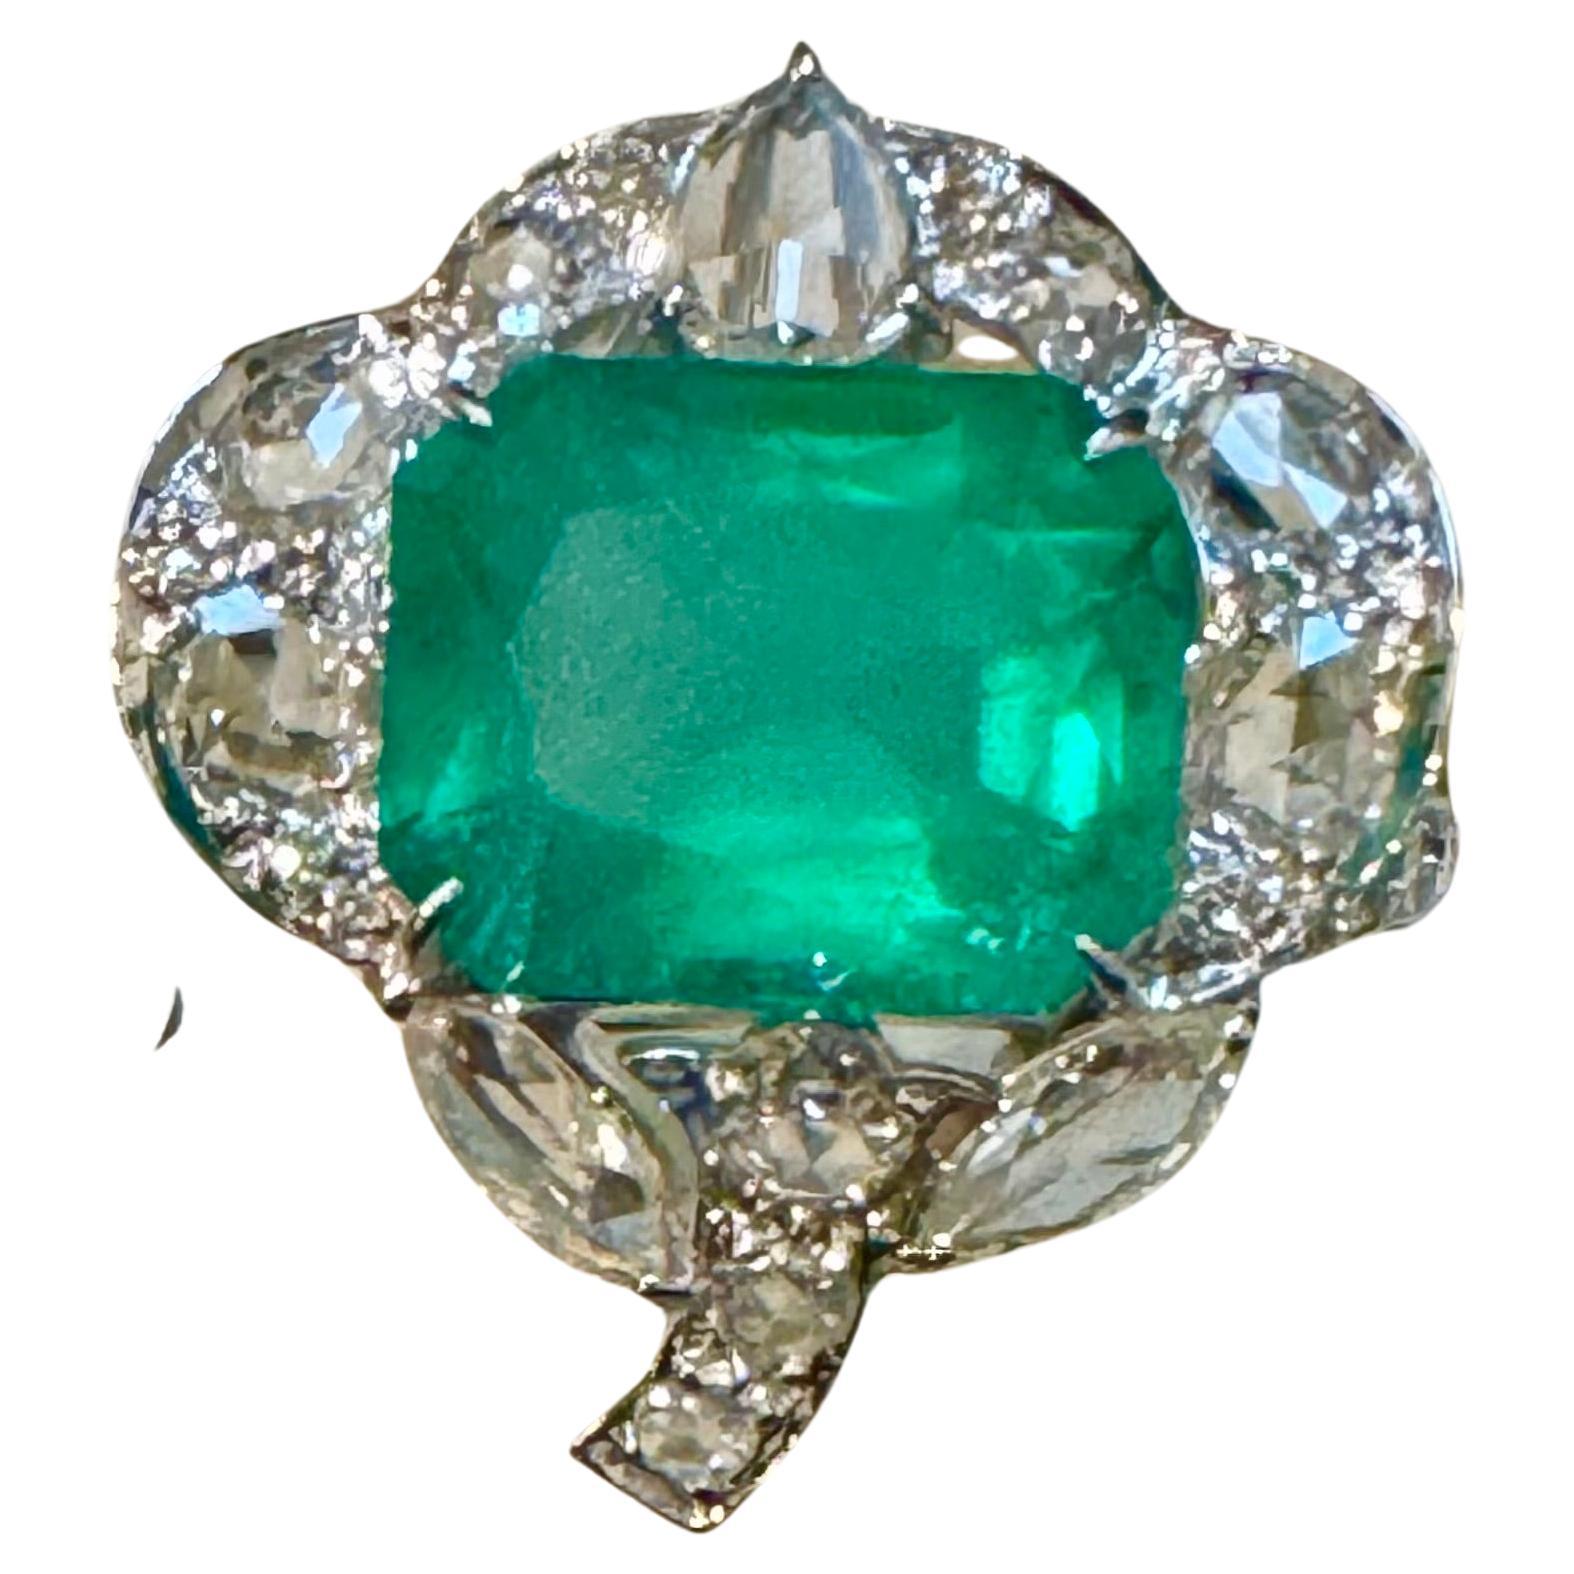 7 Ct Finest Zambian Emerald Cut Emerald & 1.5Ct Diamond Ring, 18 Kt Gold Size 9 For Sale